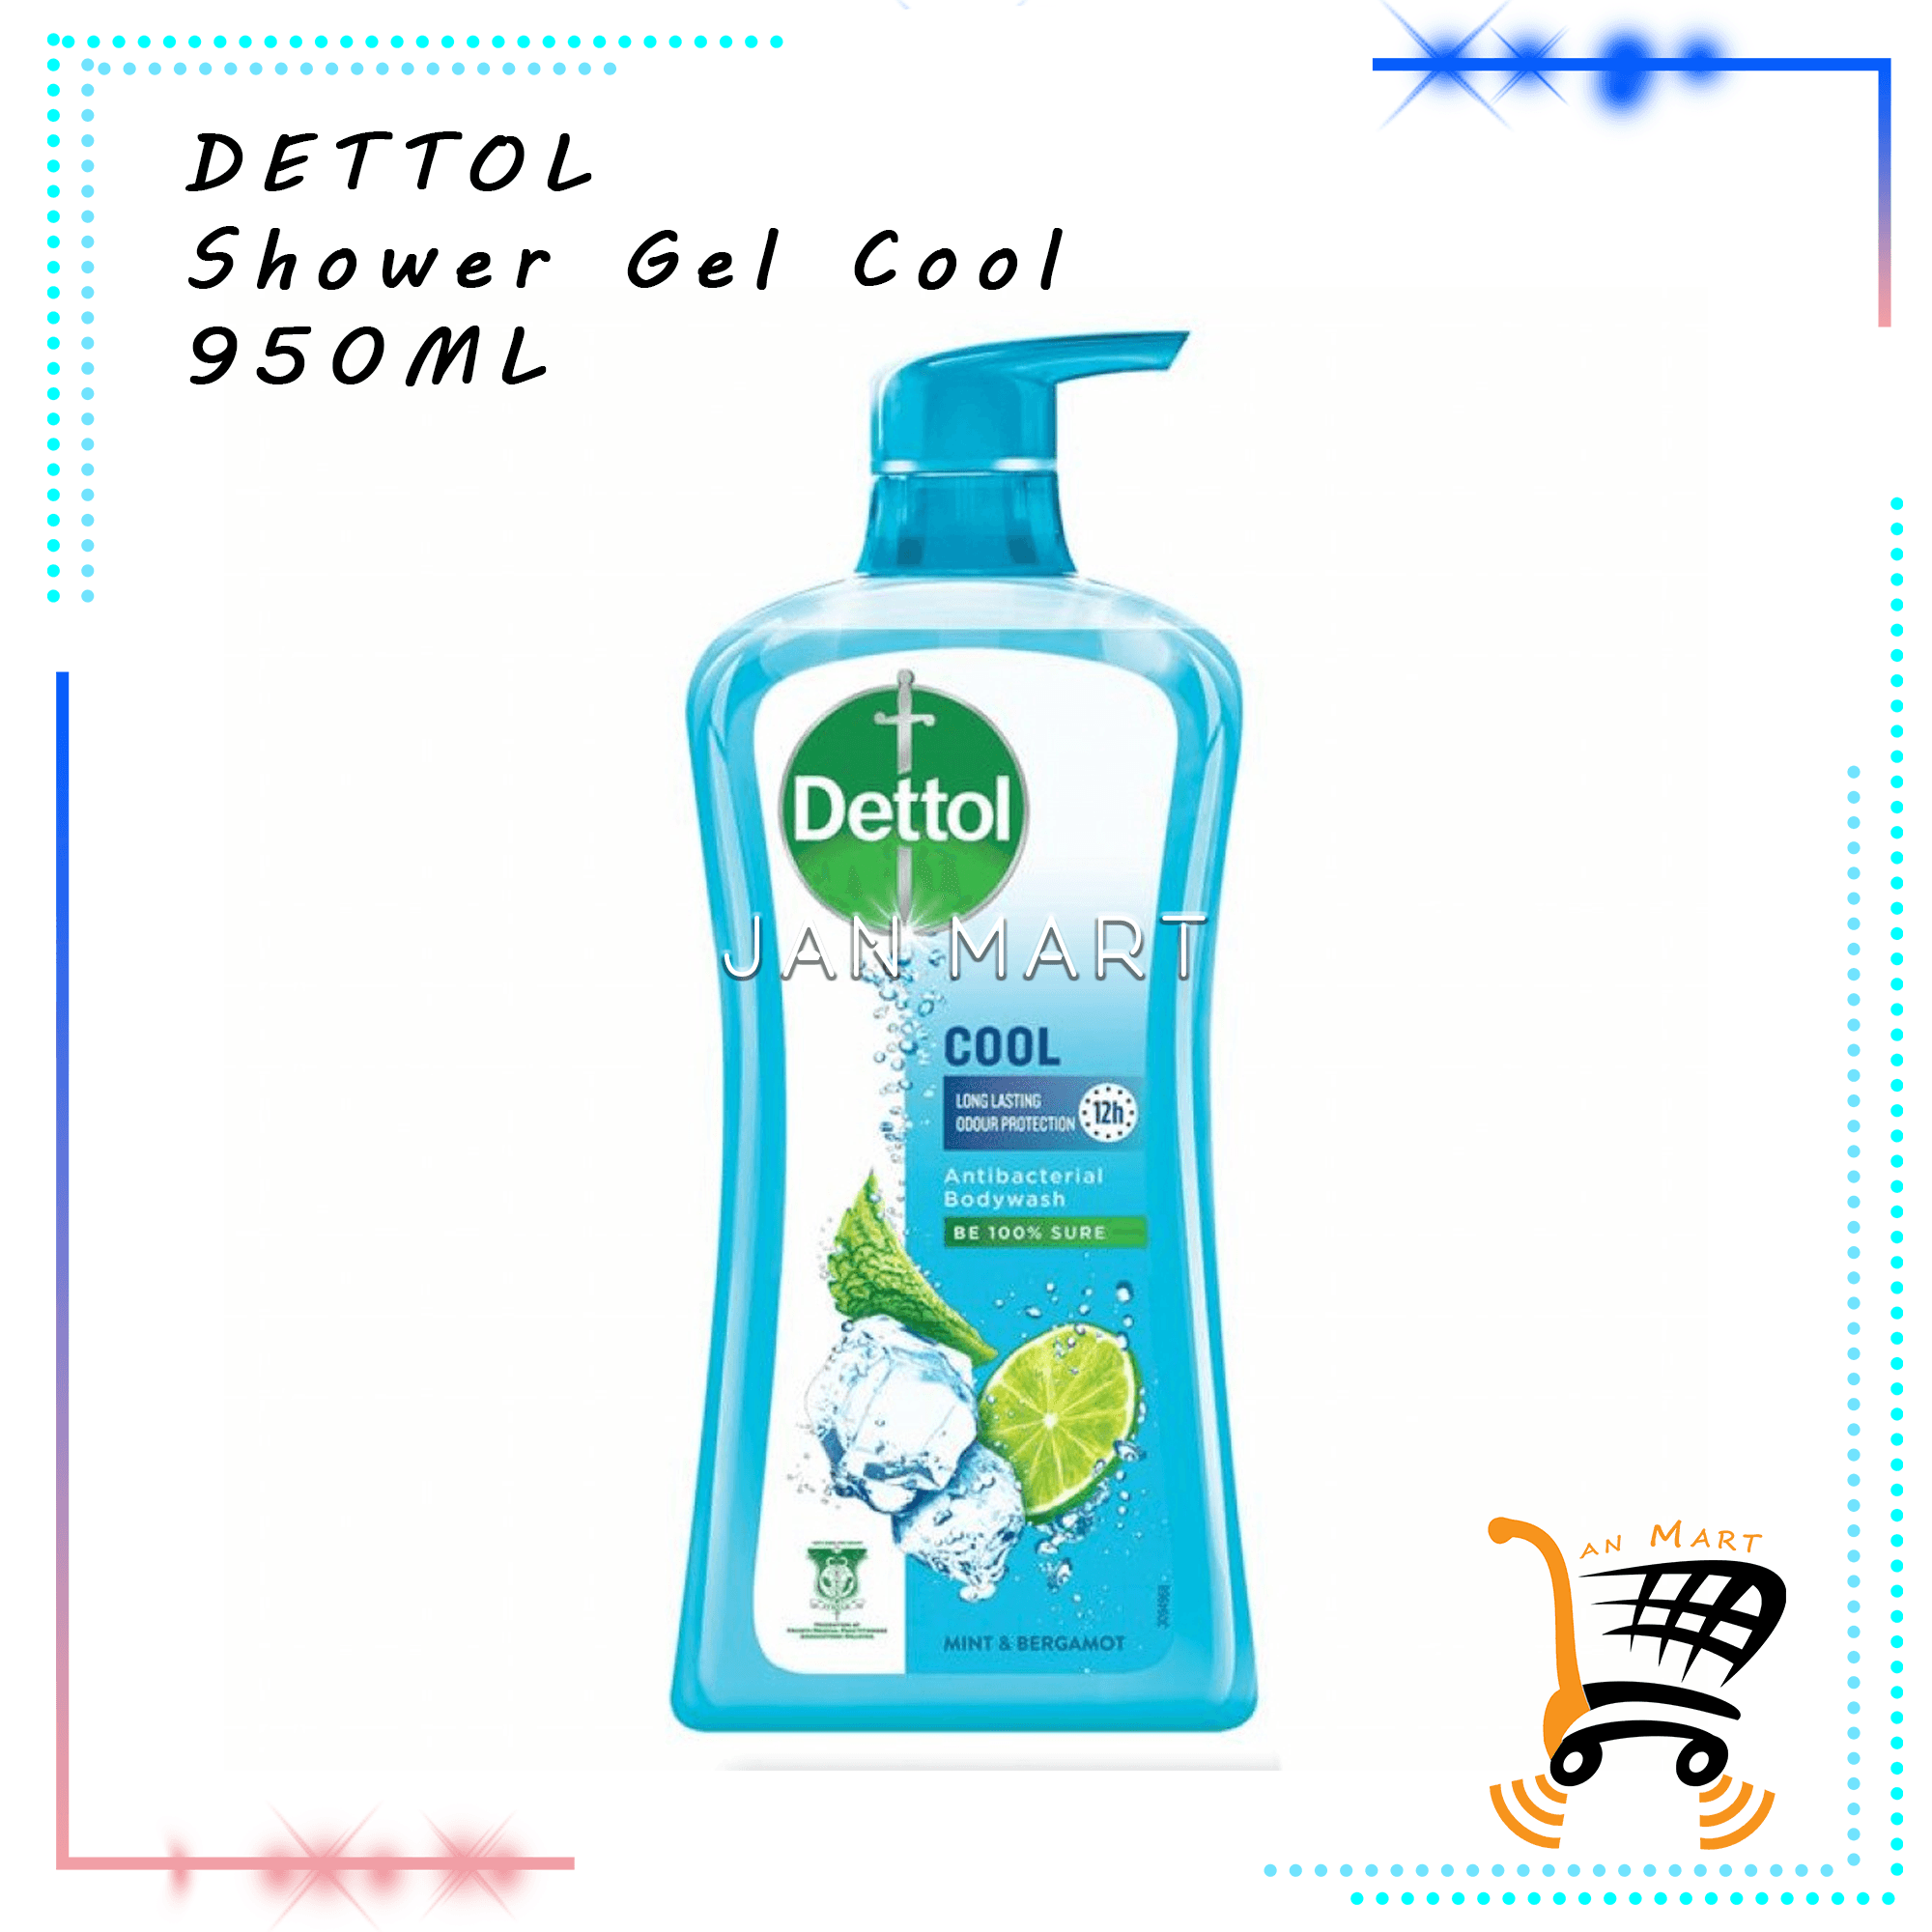 DETTOL Shower Gel Cool Fresh Original 950ML